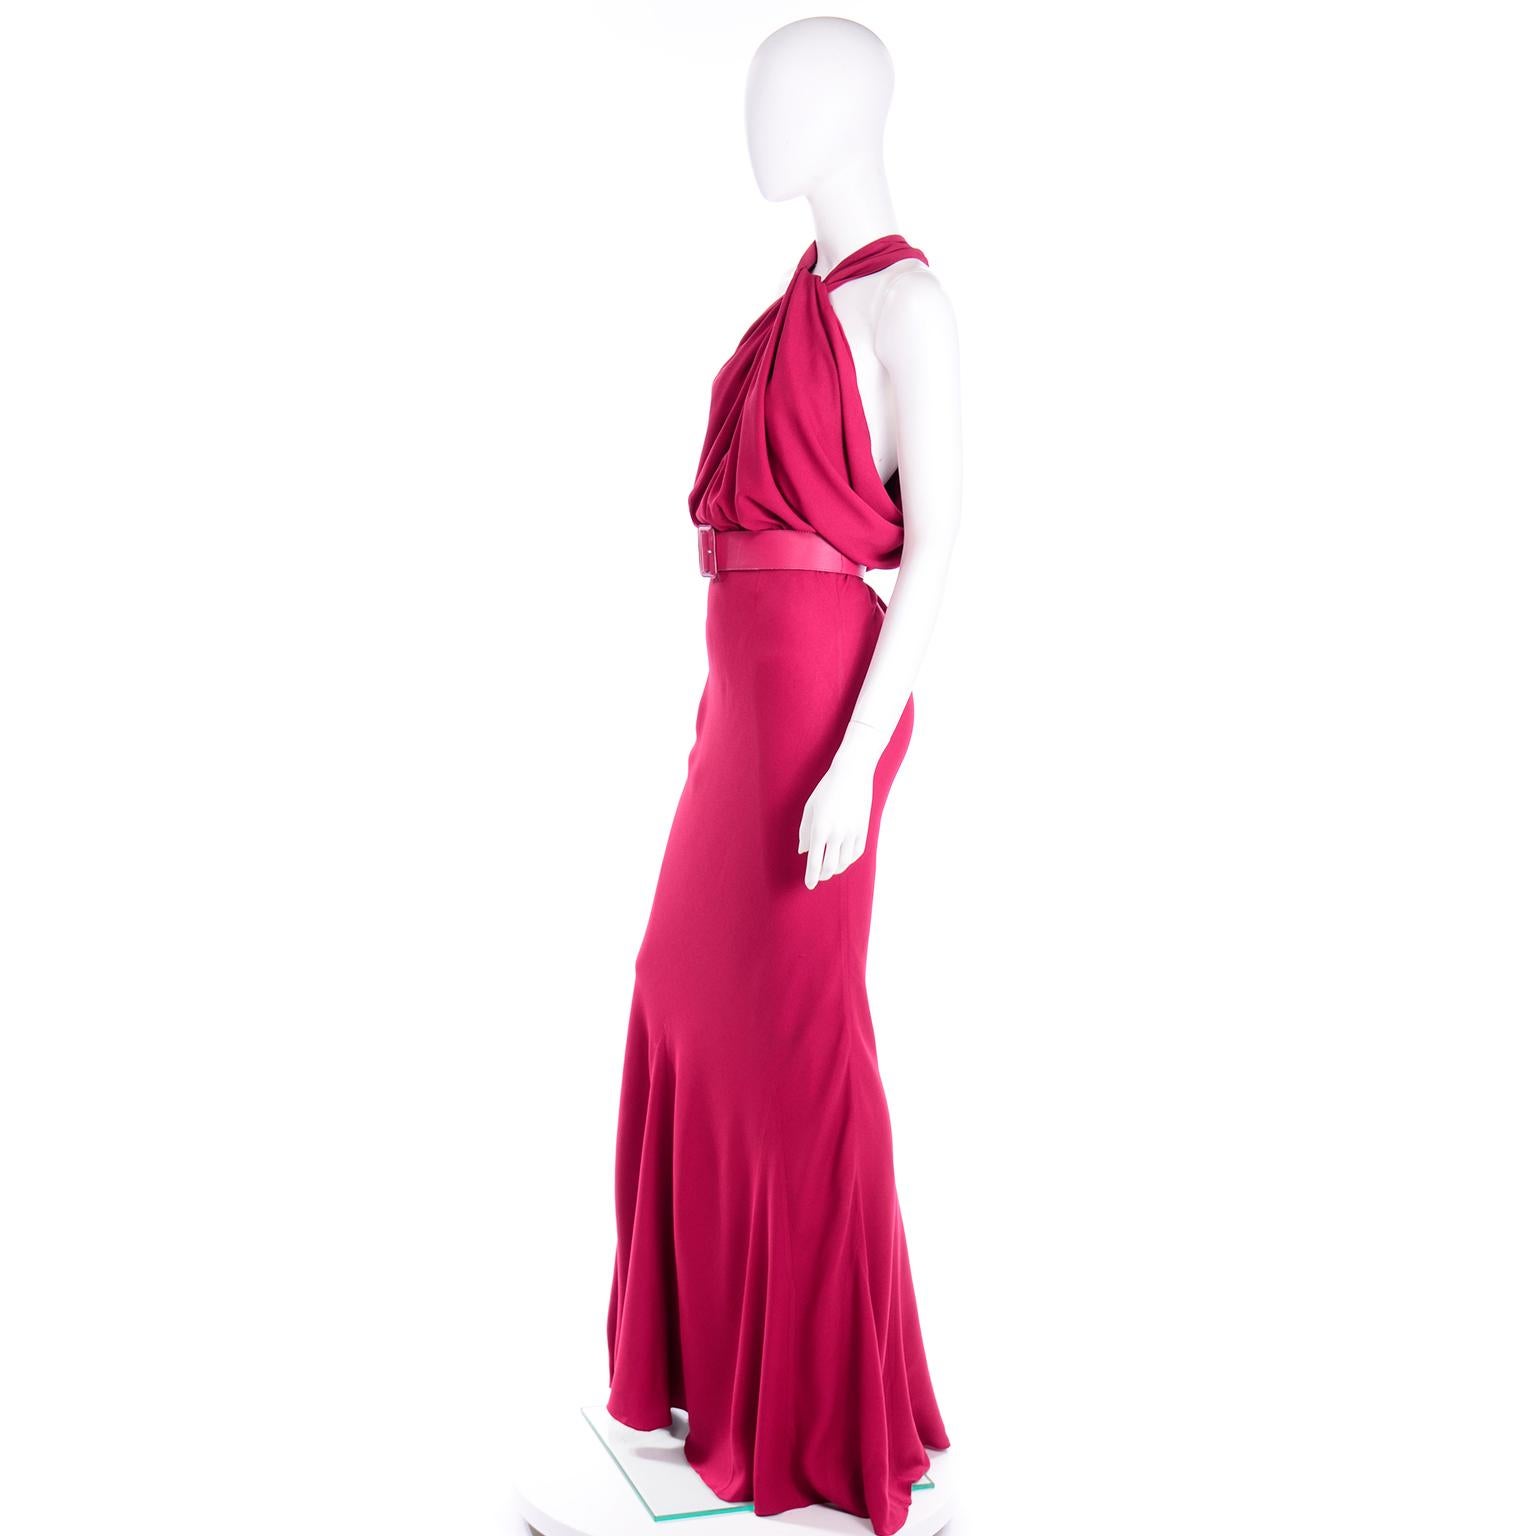 Women's Christian Dior John Galliano Raspberry Magenta Pink 1930s Inspired Evening Dress